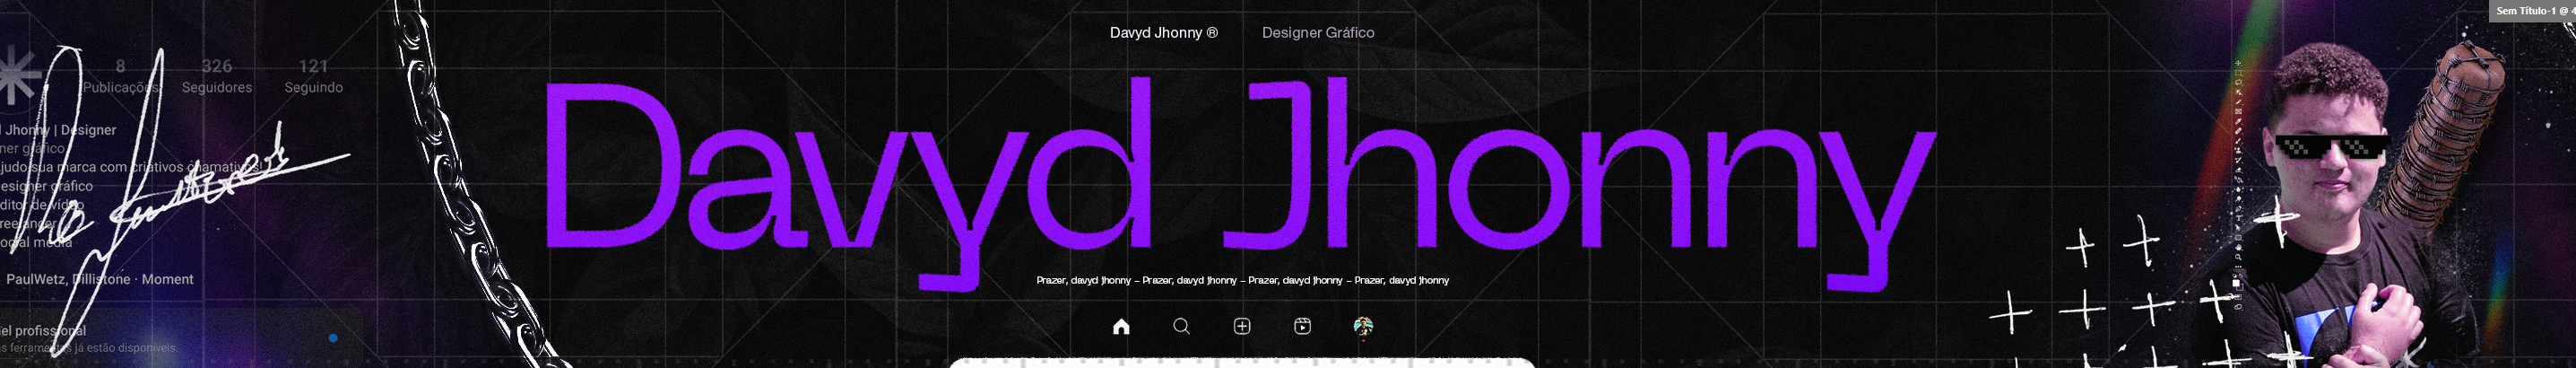 Davyd Jhonny's profile banner